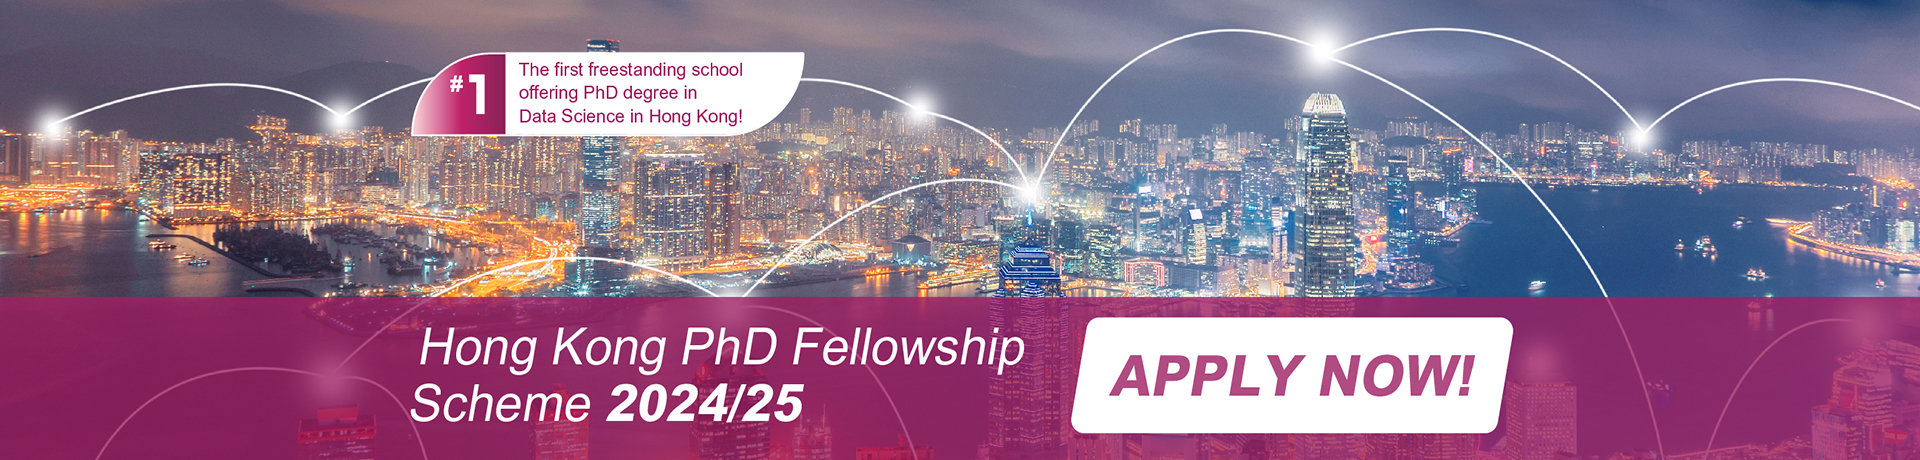 PhD Fellowship Scheme (HKPFS) 2024-25 e banner